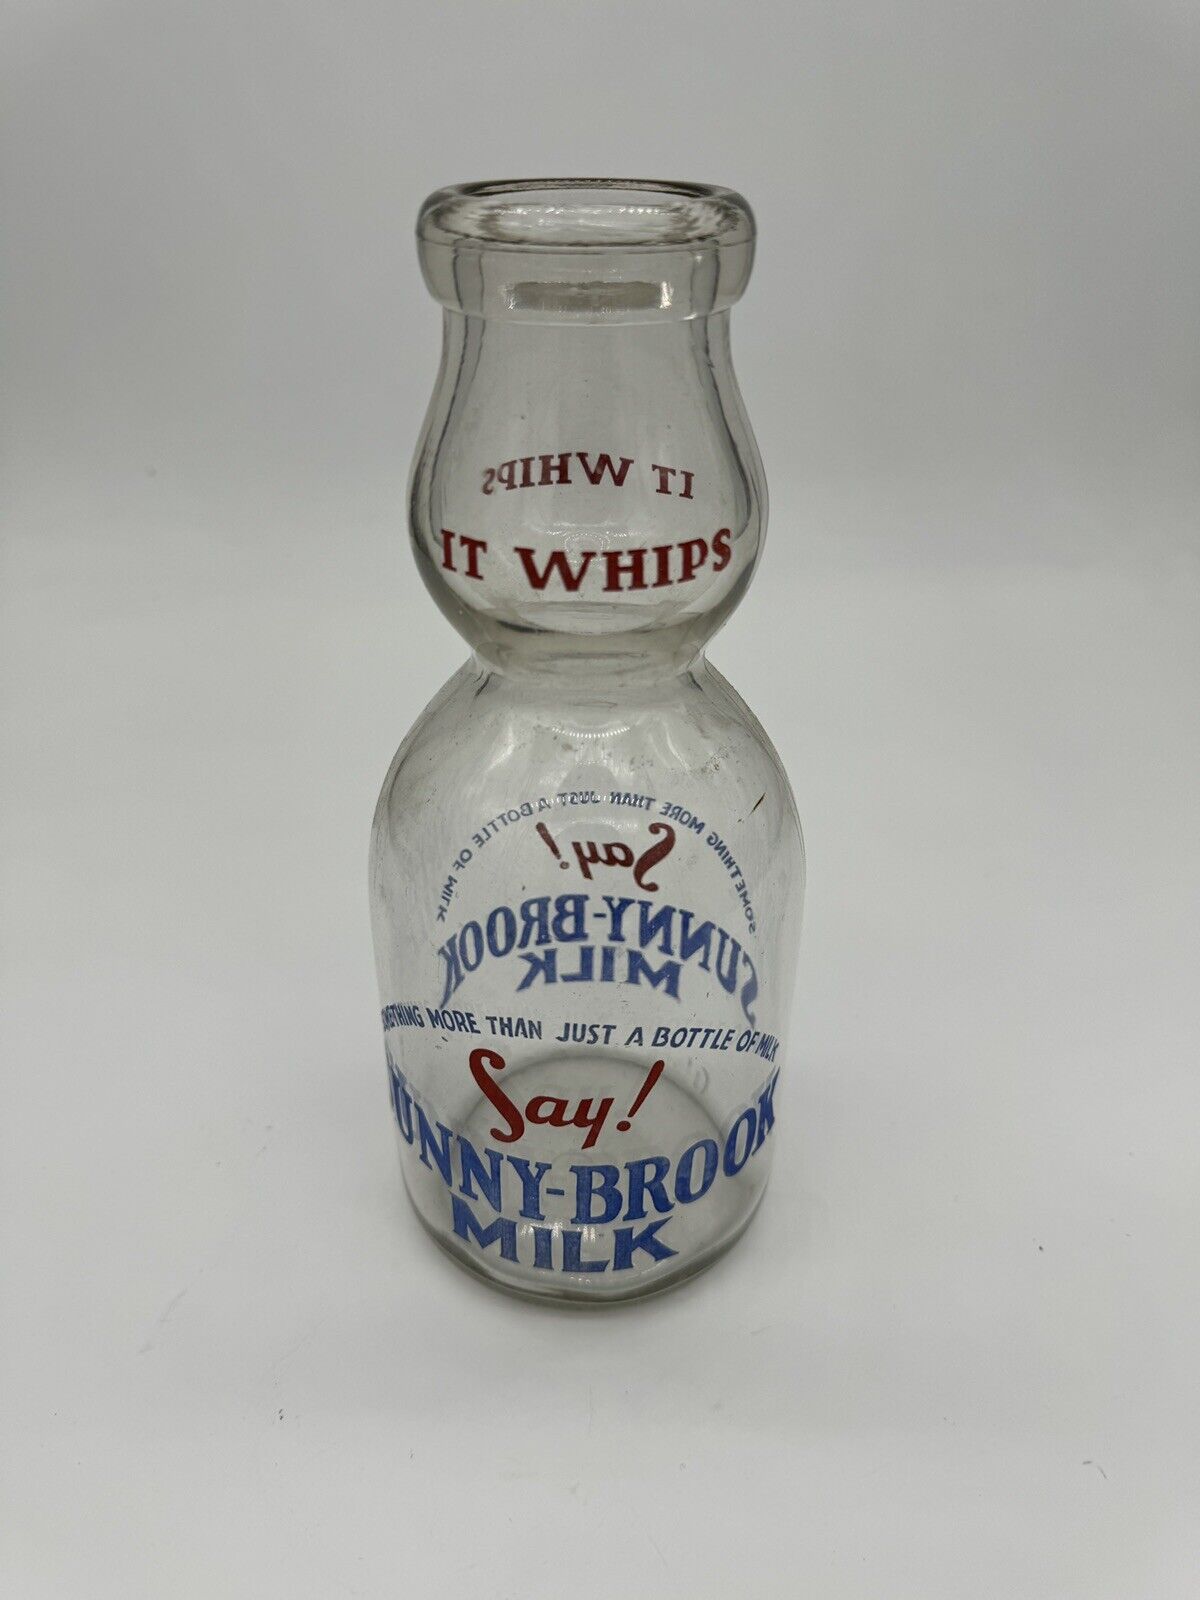 Vtg Sunny-brook Farms Dairy Milk Bottle Pint Chicago Illinois - It Whips Slogan